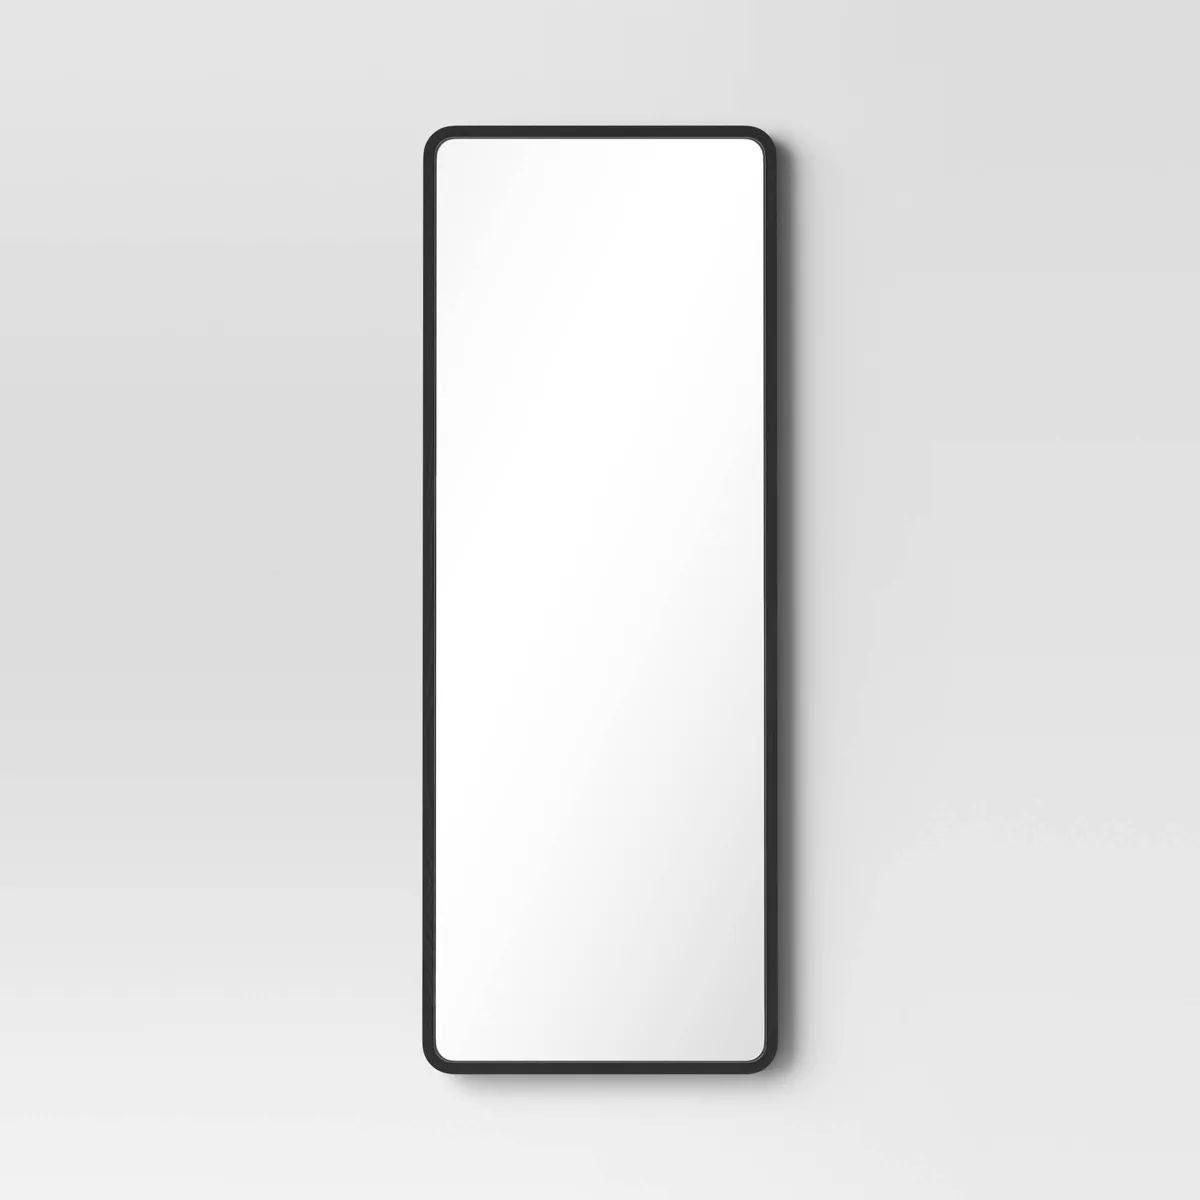 22" x 60" Rounded Corner Wood Leaner Mirror Black - Threshold™ | Target